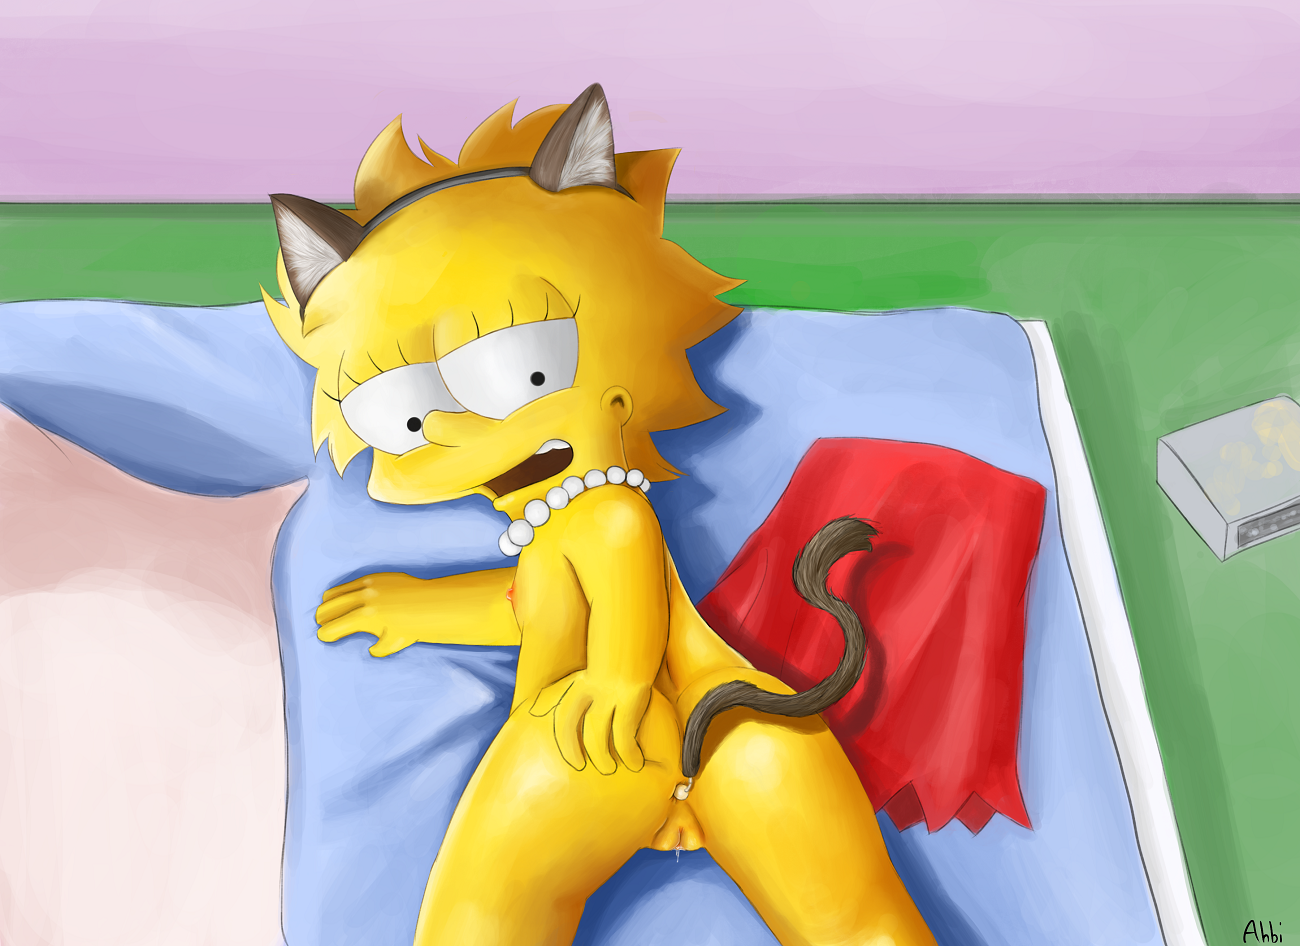 Porno lisa simpsons The Simpsons